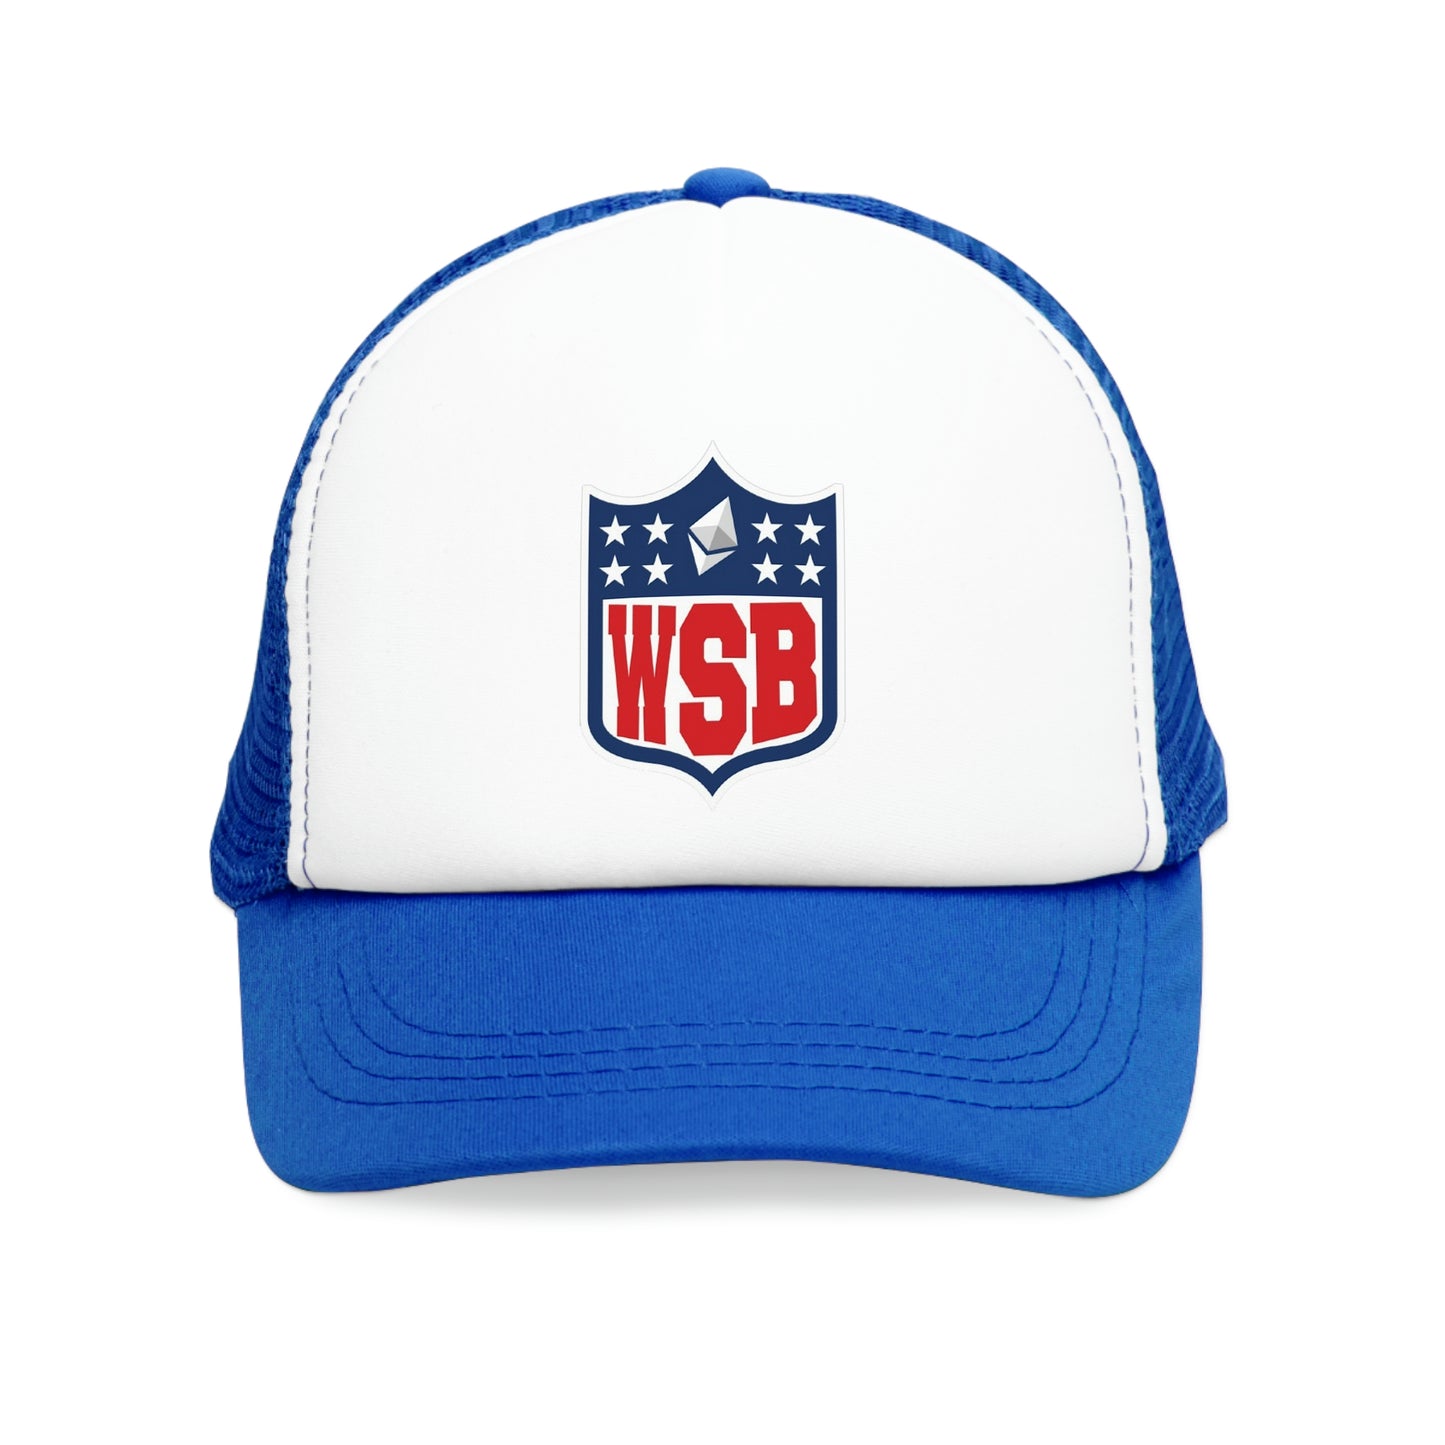 WSB NFL-Style Trucker Hat